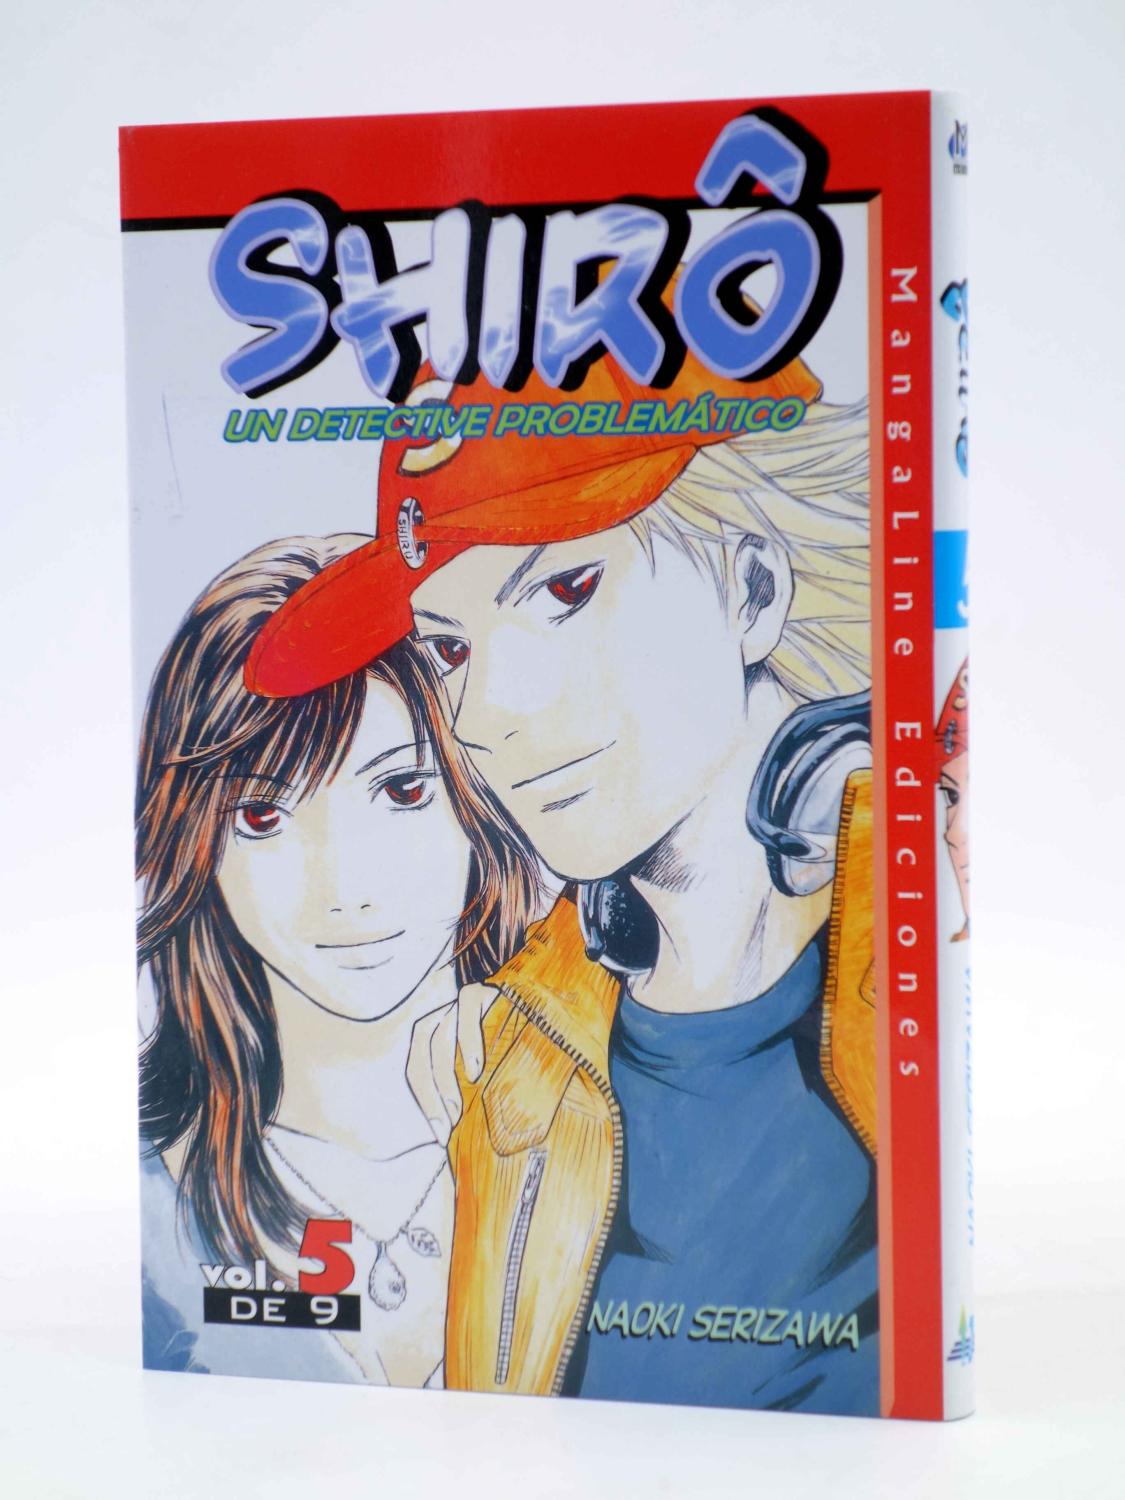 SHIRO, UN DETECTIVE PROBLEMÁTICO 5. (Naoki Serizawa) Mangaline, 2006. OFRT antes 7E - Naoki Serizawa